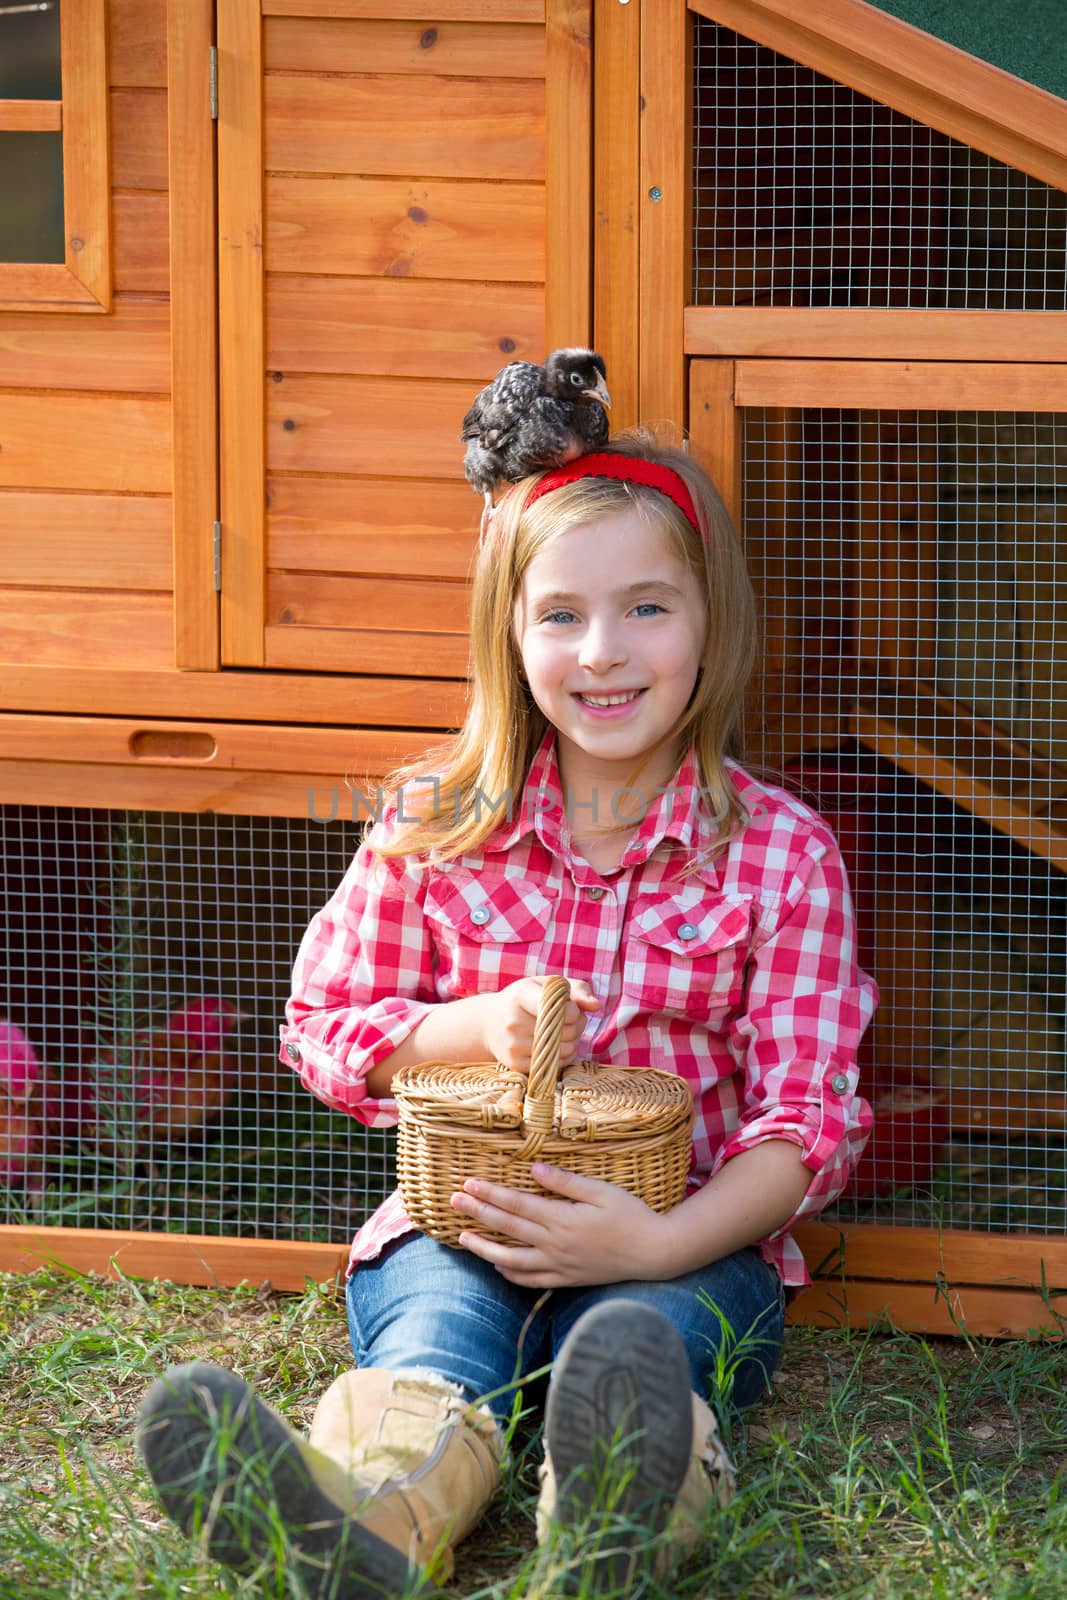 breeder hens kid girl rancher farmer with chicks in chicken coop by lunamarina